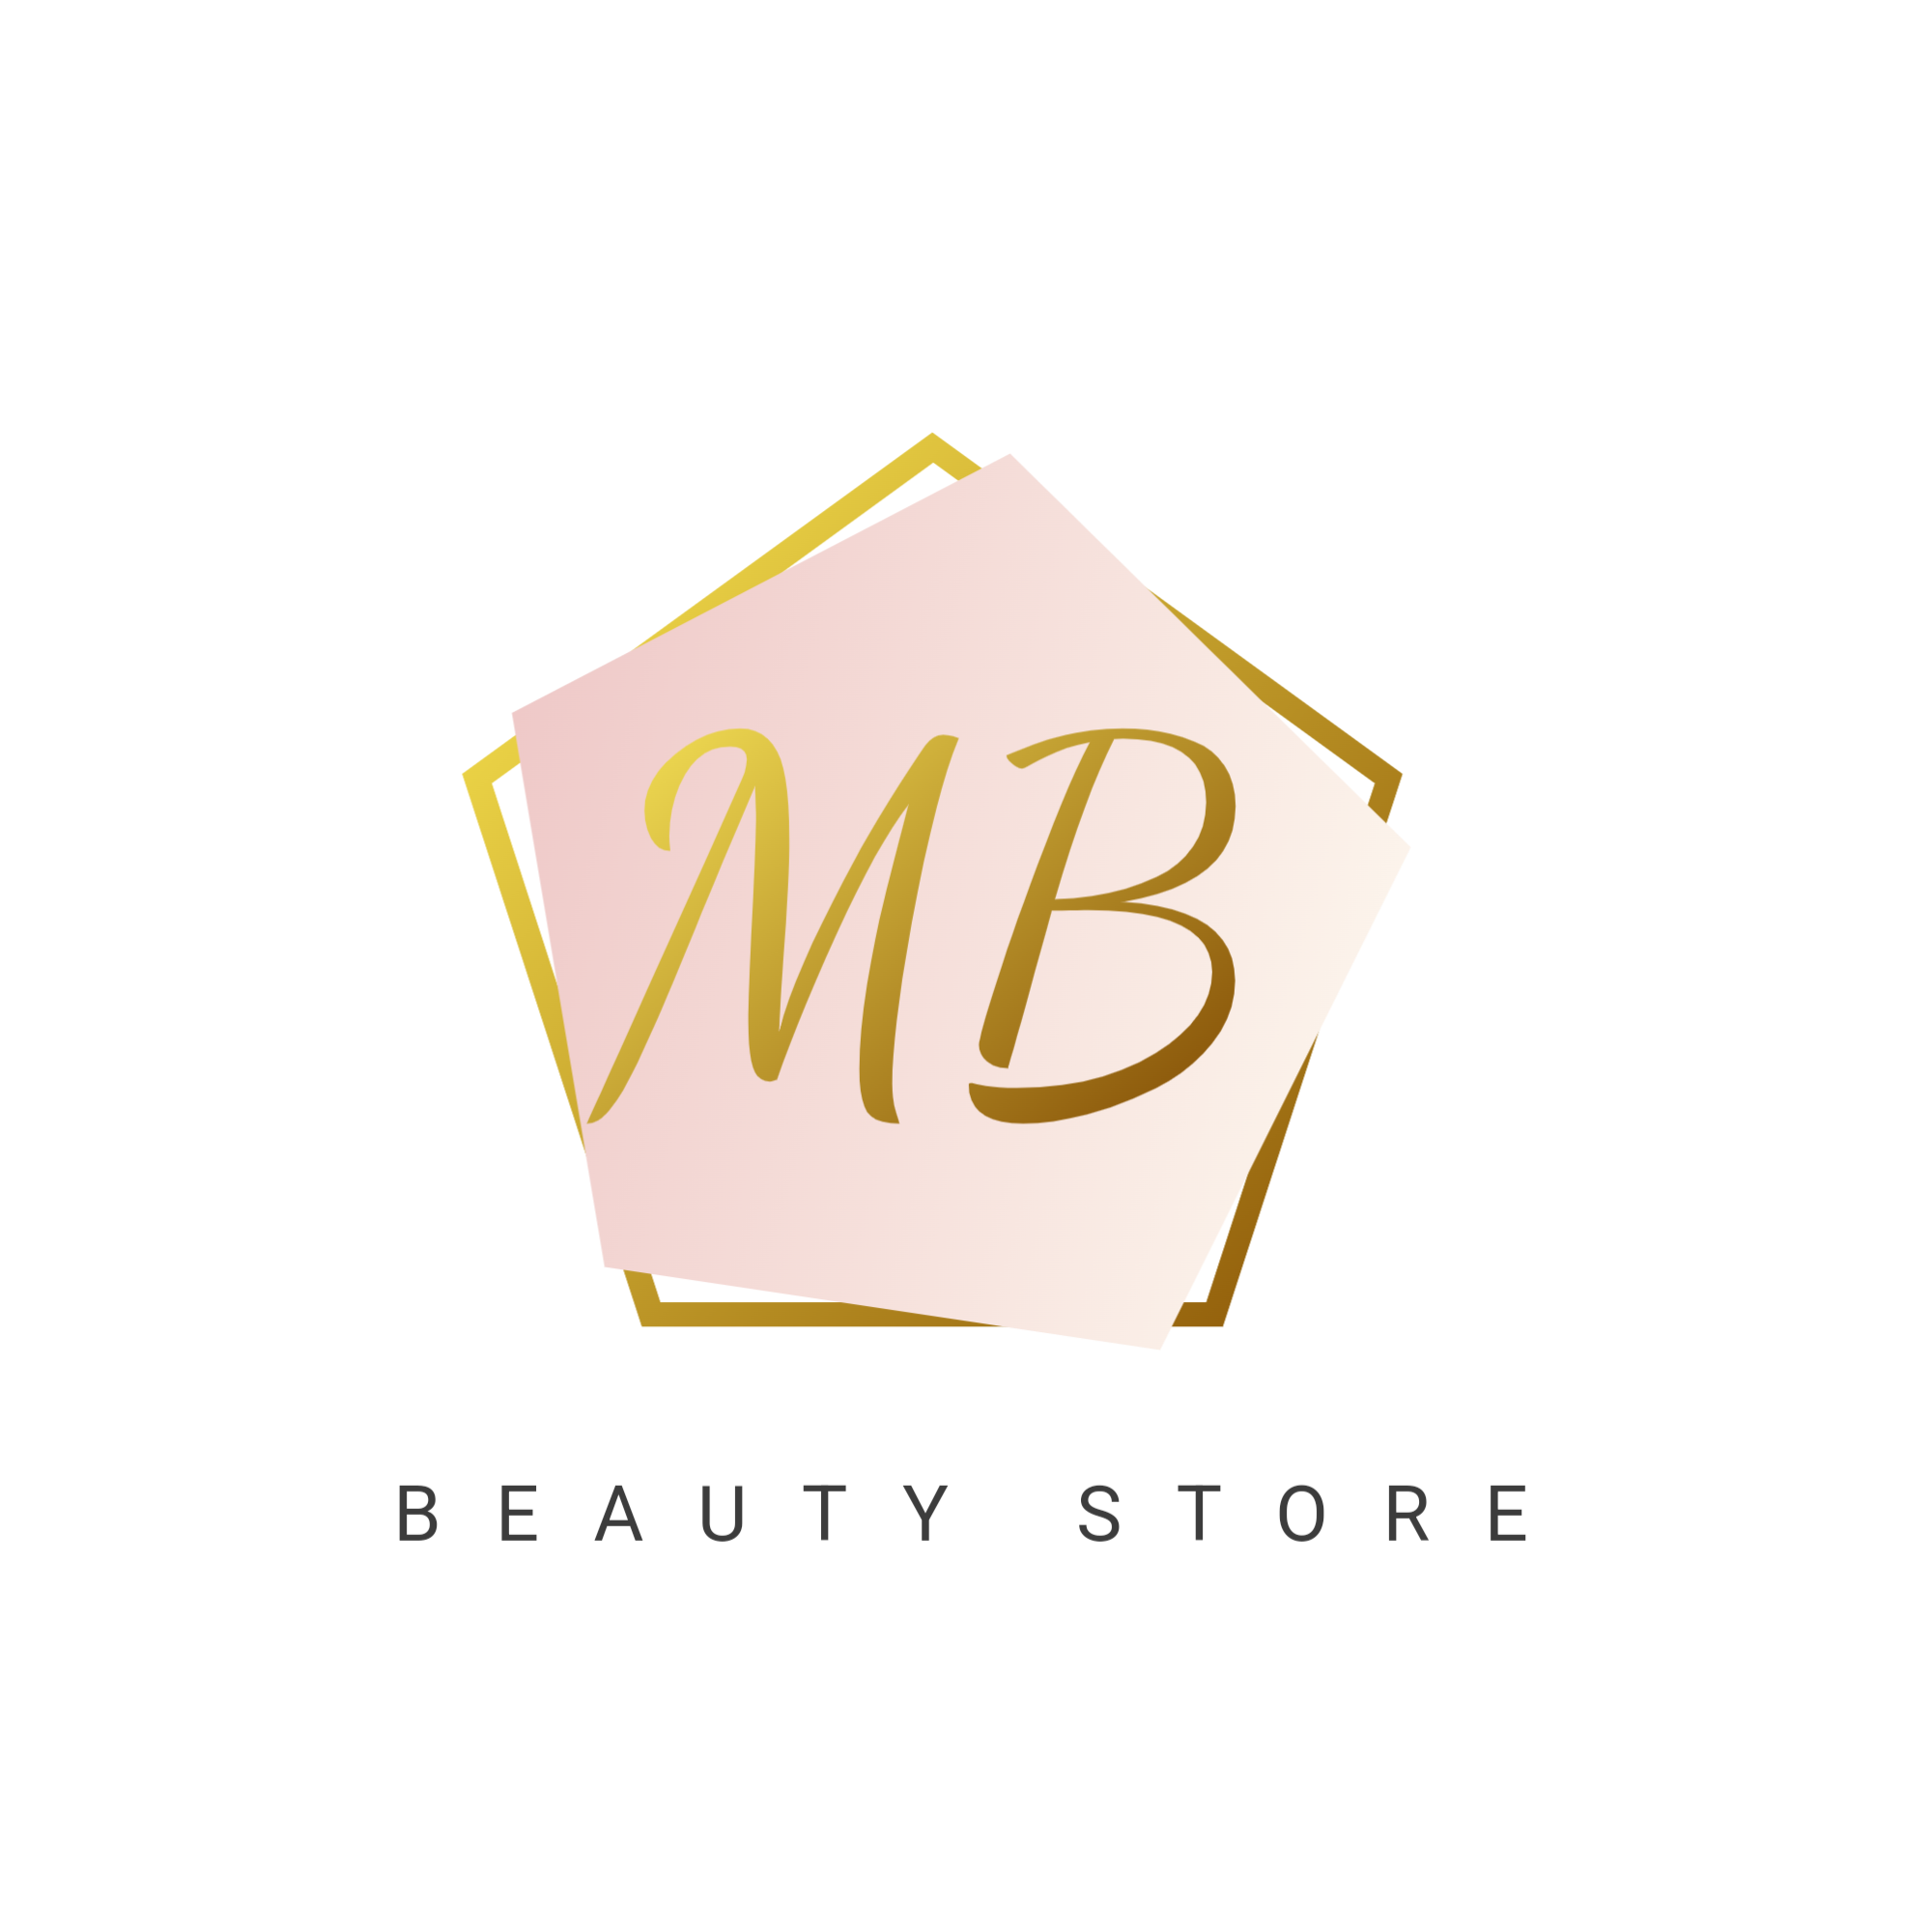 MB beauty store logo